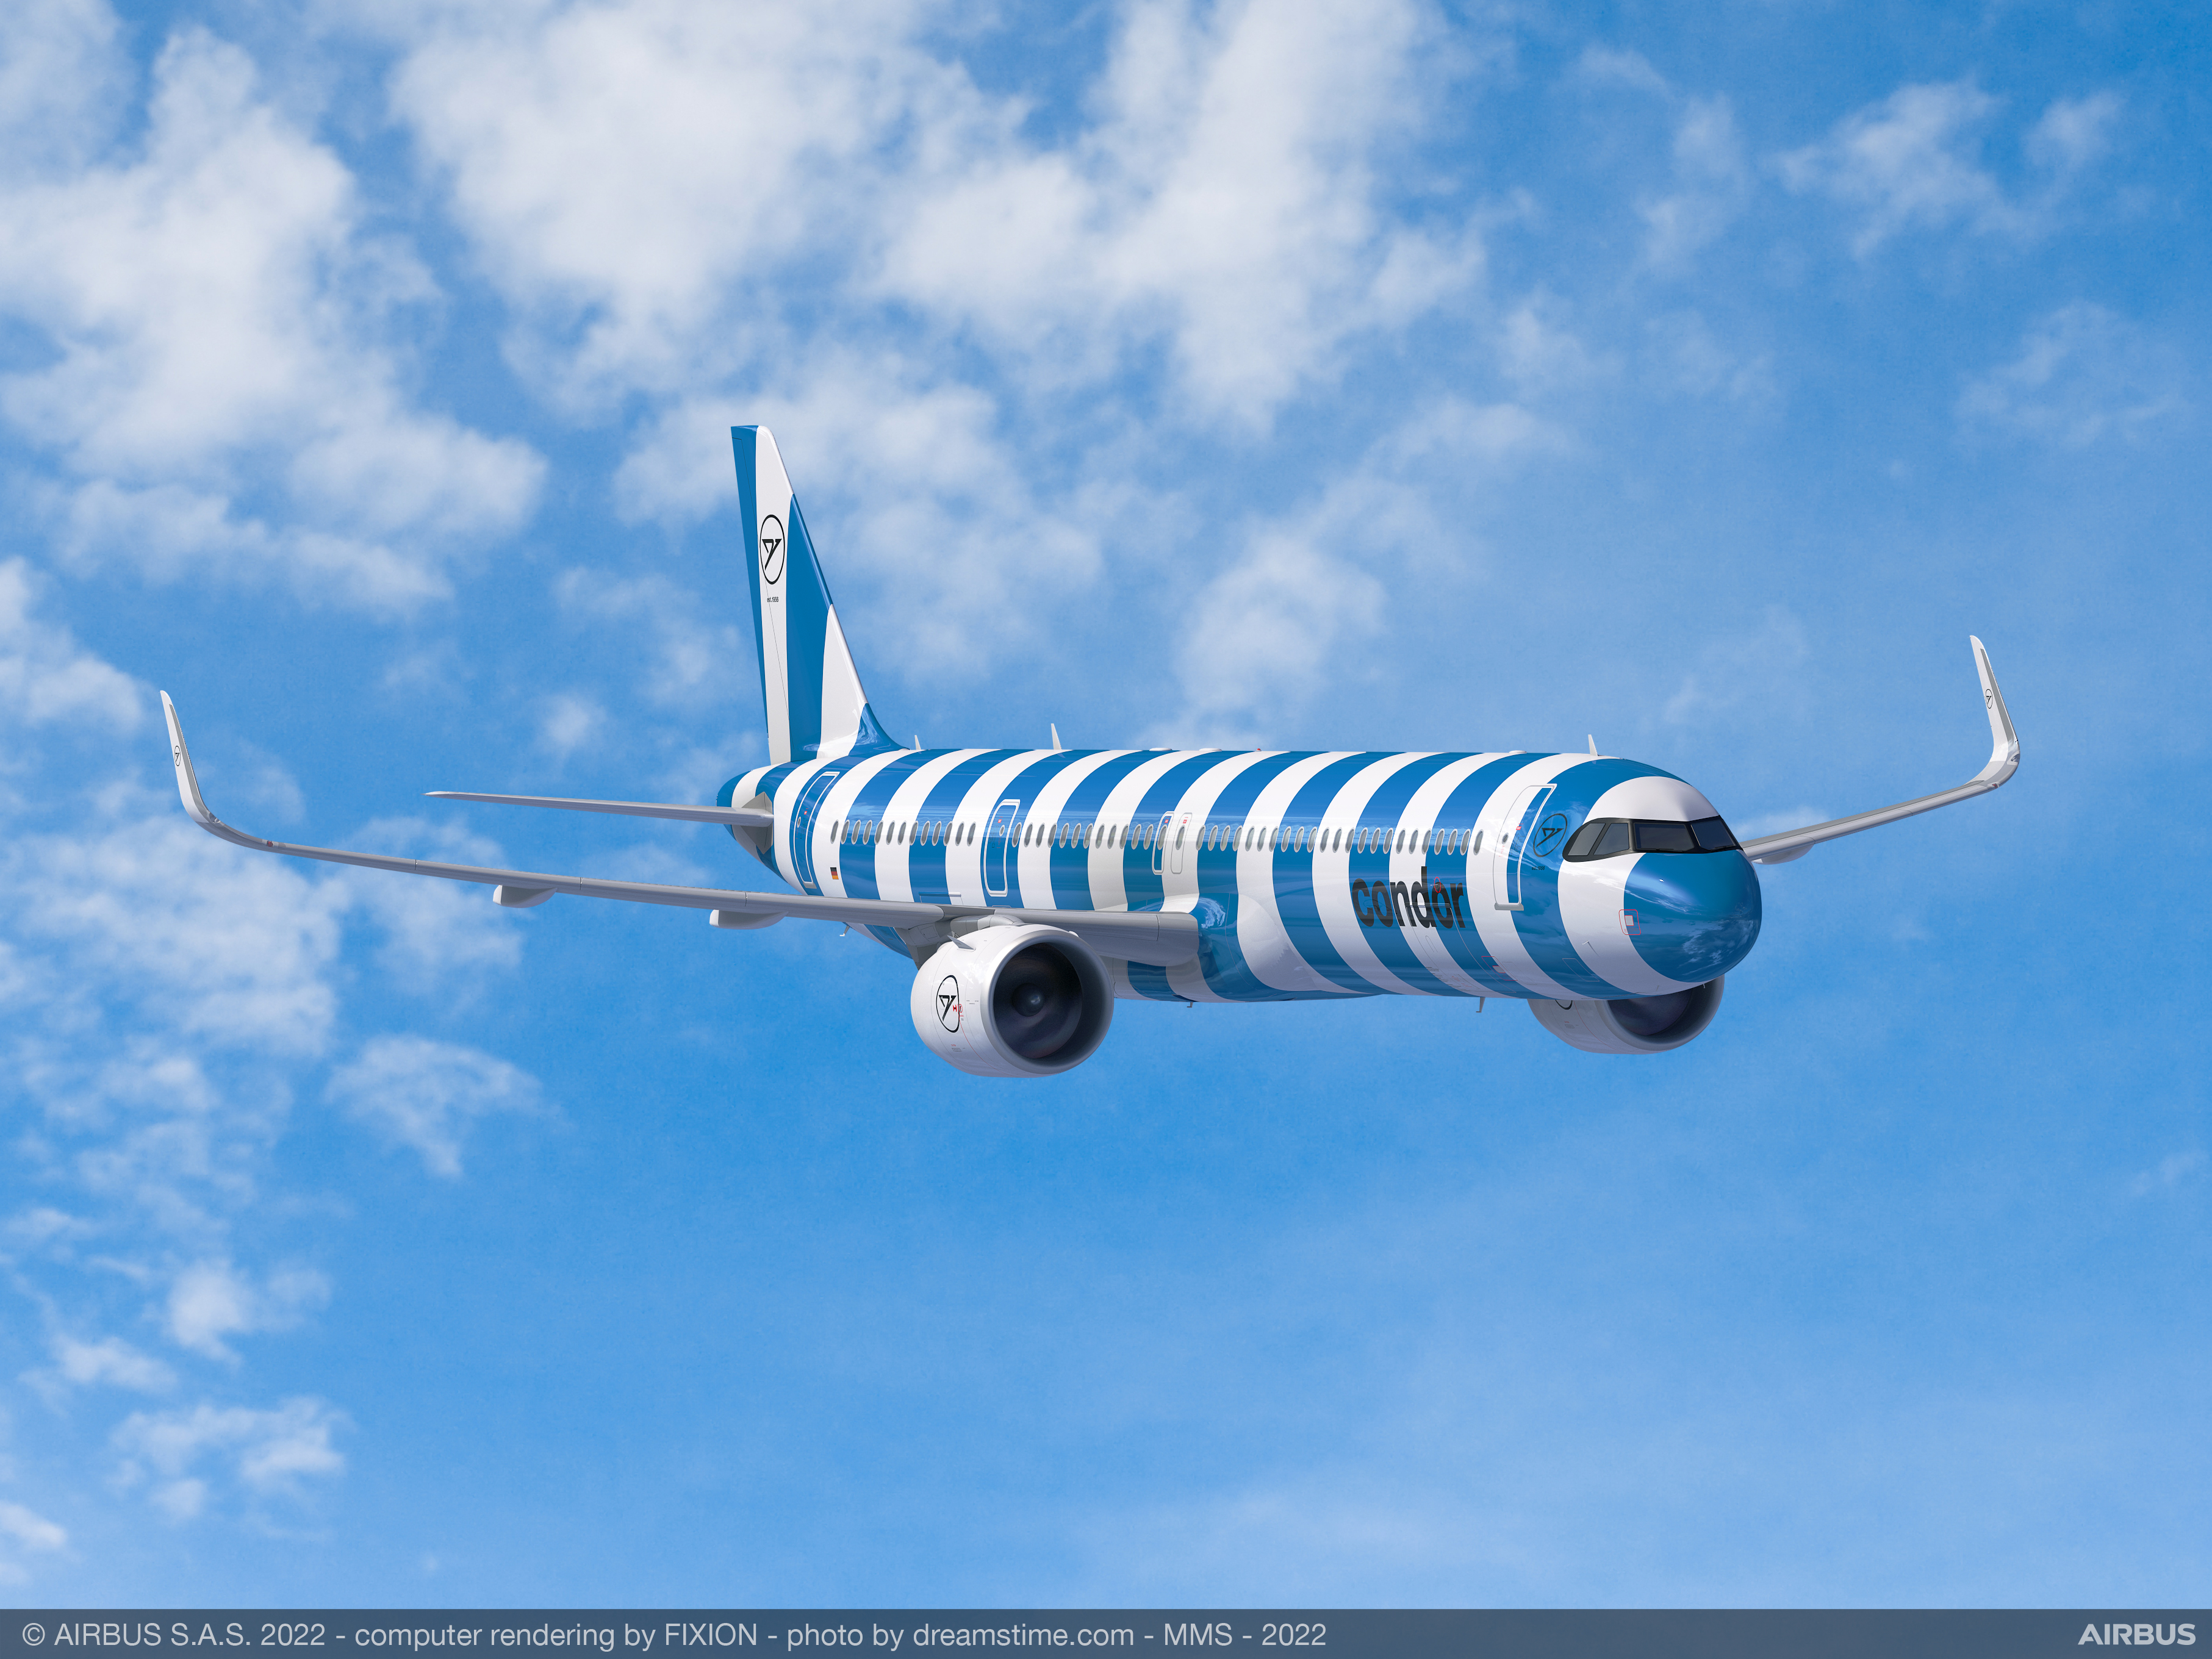 Condor renews fleet with Airbus A320neo family